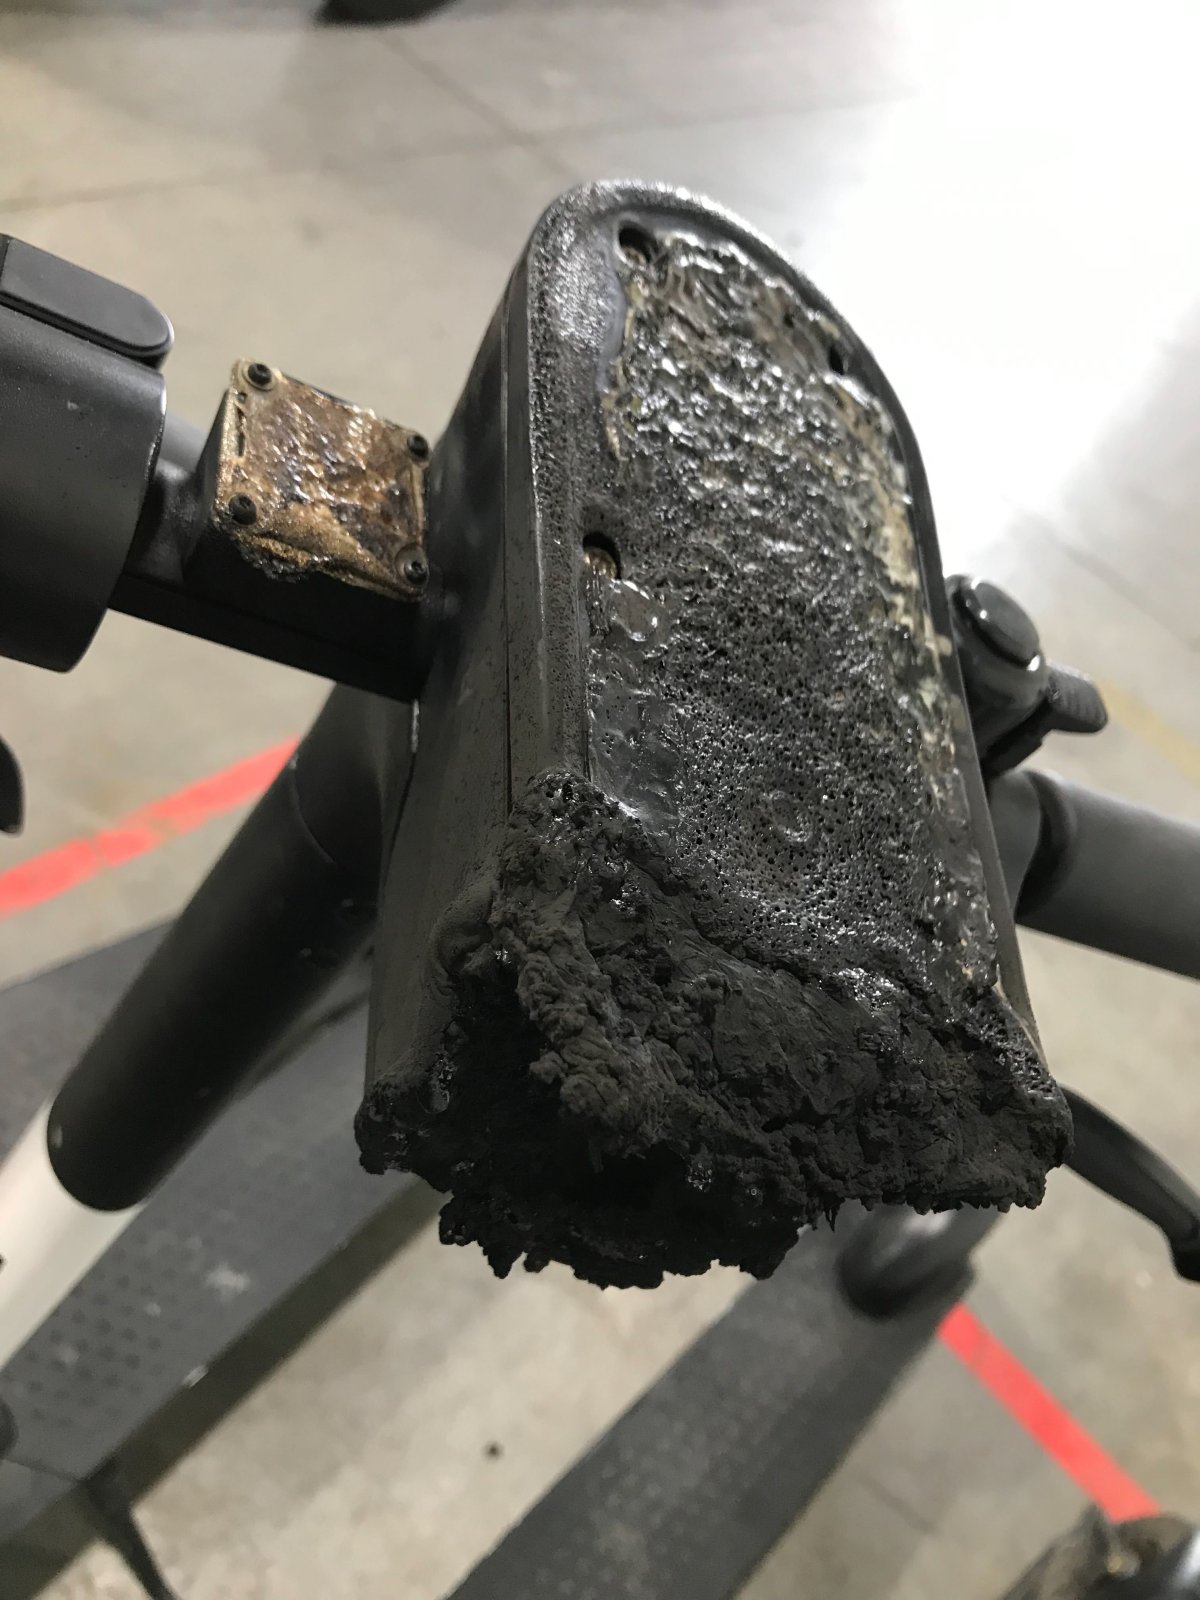 A photo of a burned Bird e-scooter console.